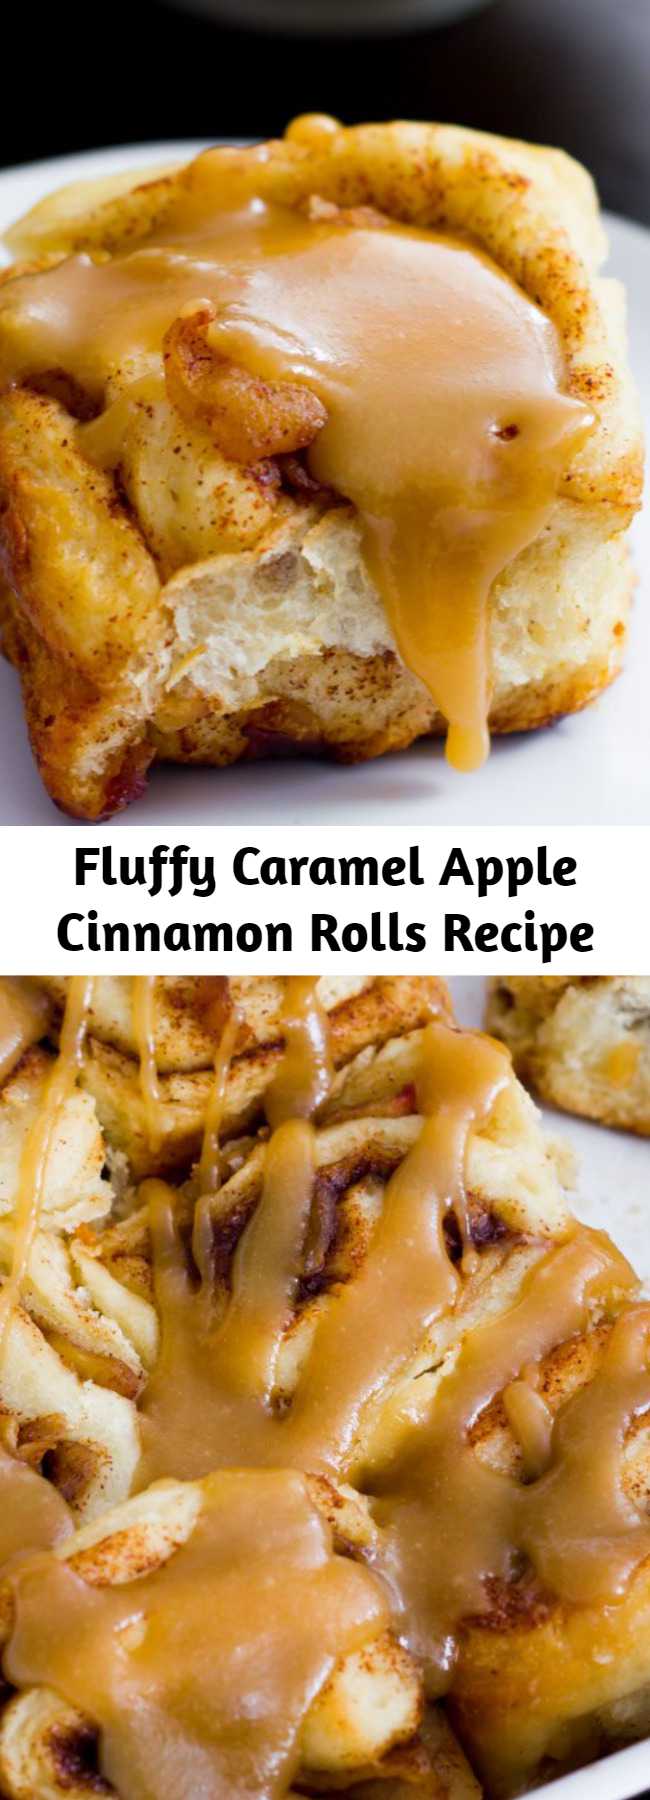 Fluffy Caramel Apple Cinnamon Rolls Recipe - Soft, fluffy cinnamon rolls stuffed with brown sugar & apples, and generously glazed with homemade caramel.